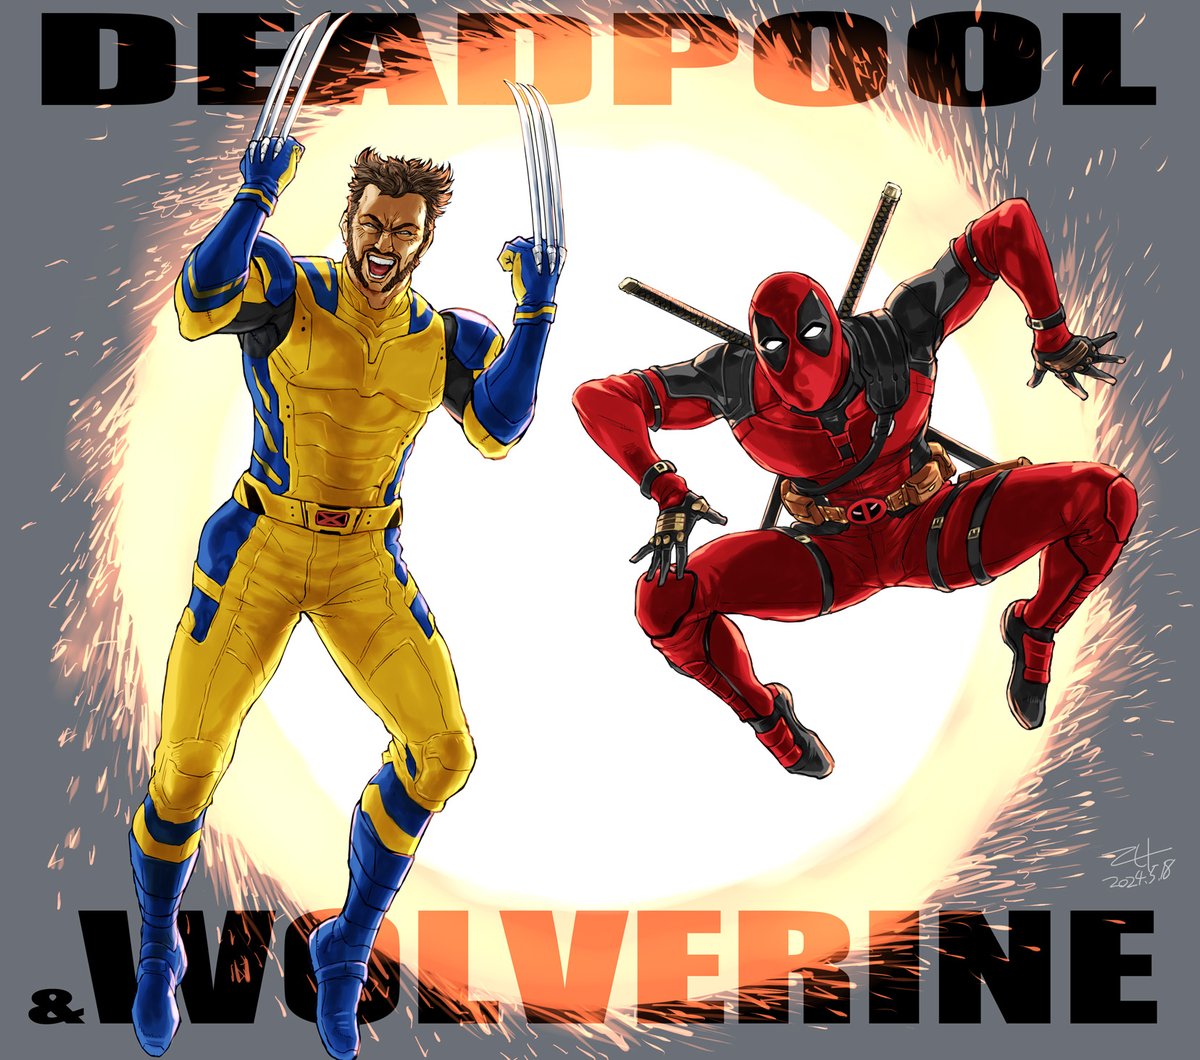 Deadpool&Wolverine楽しみですね。